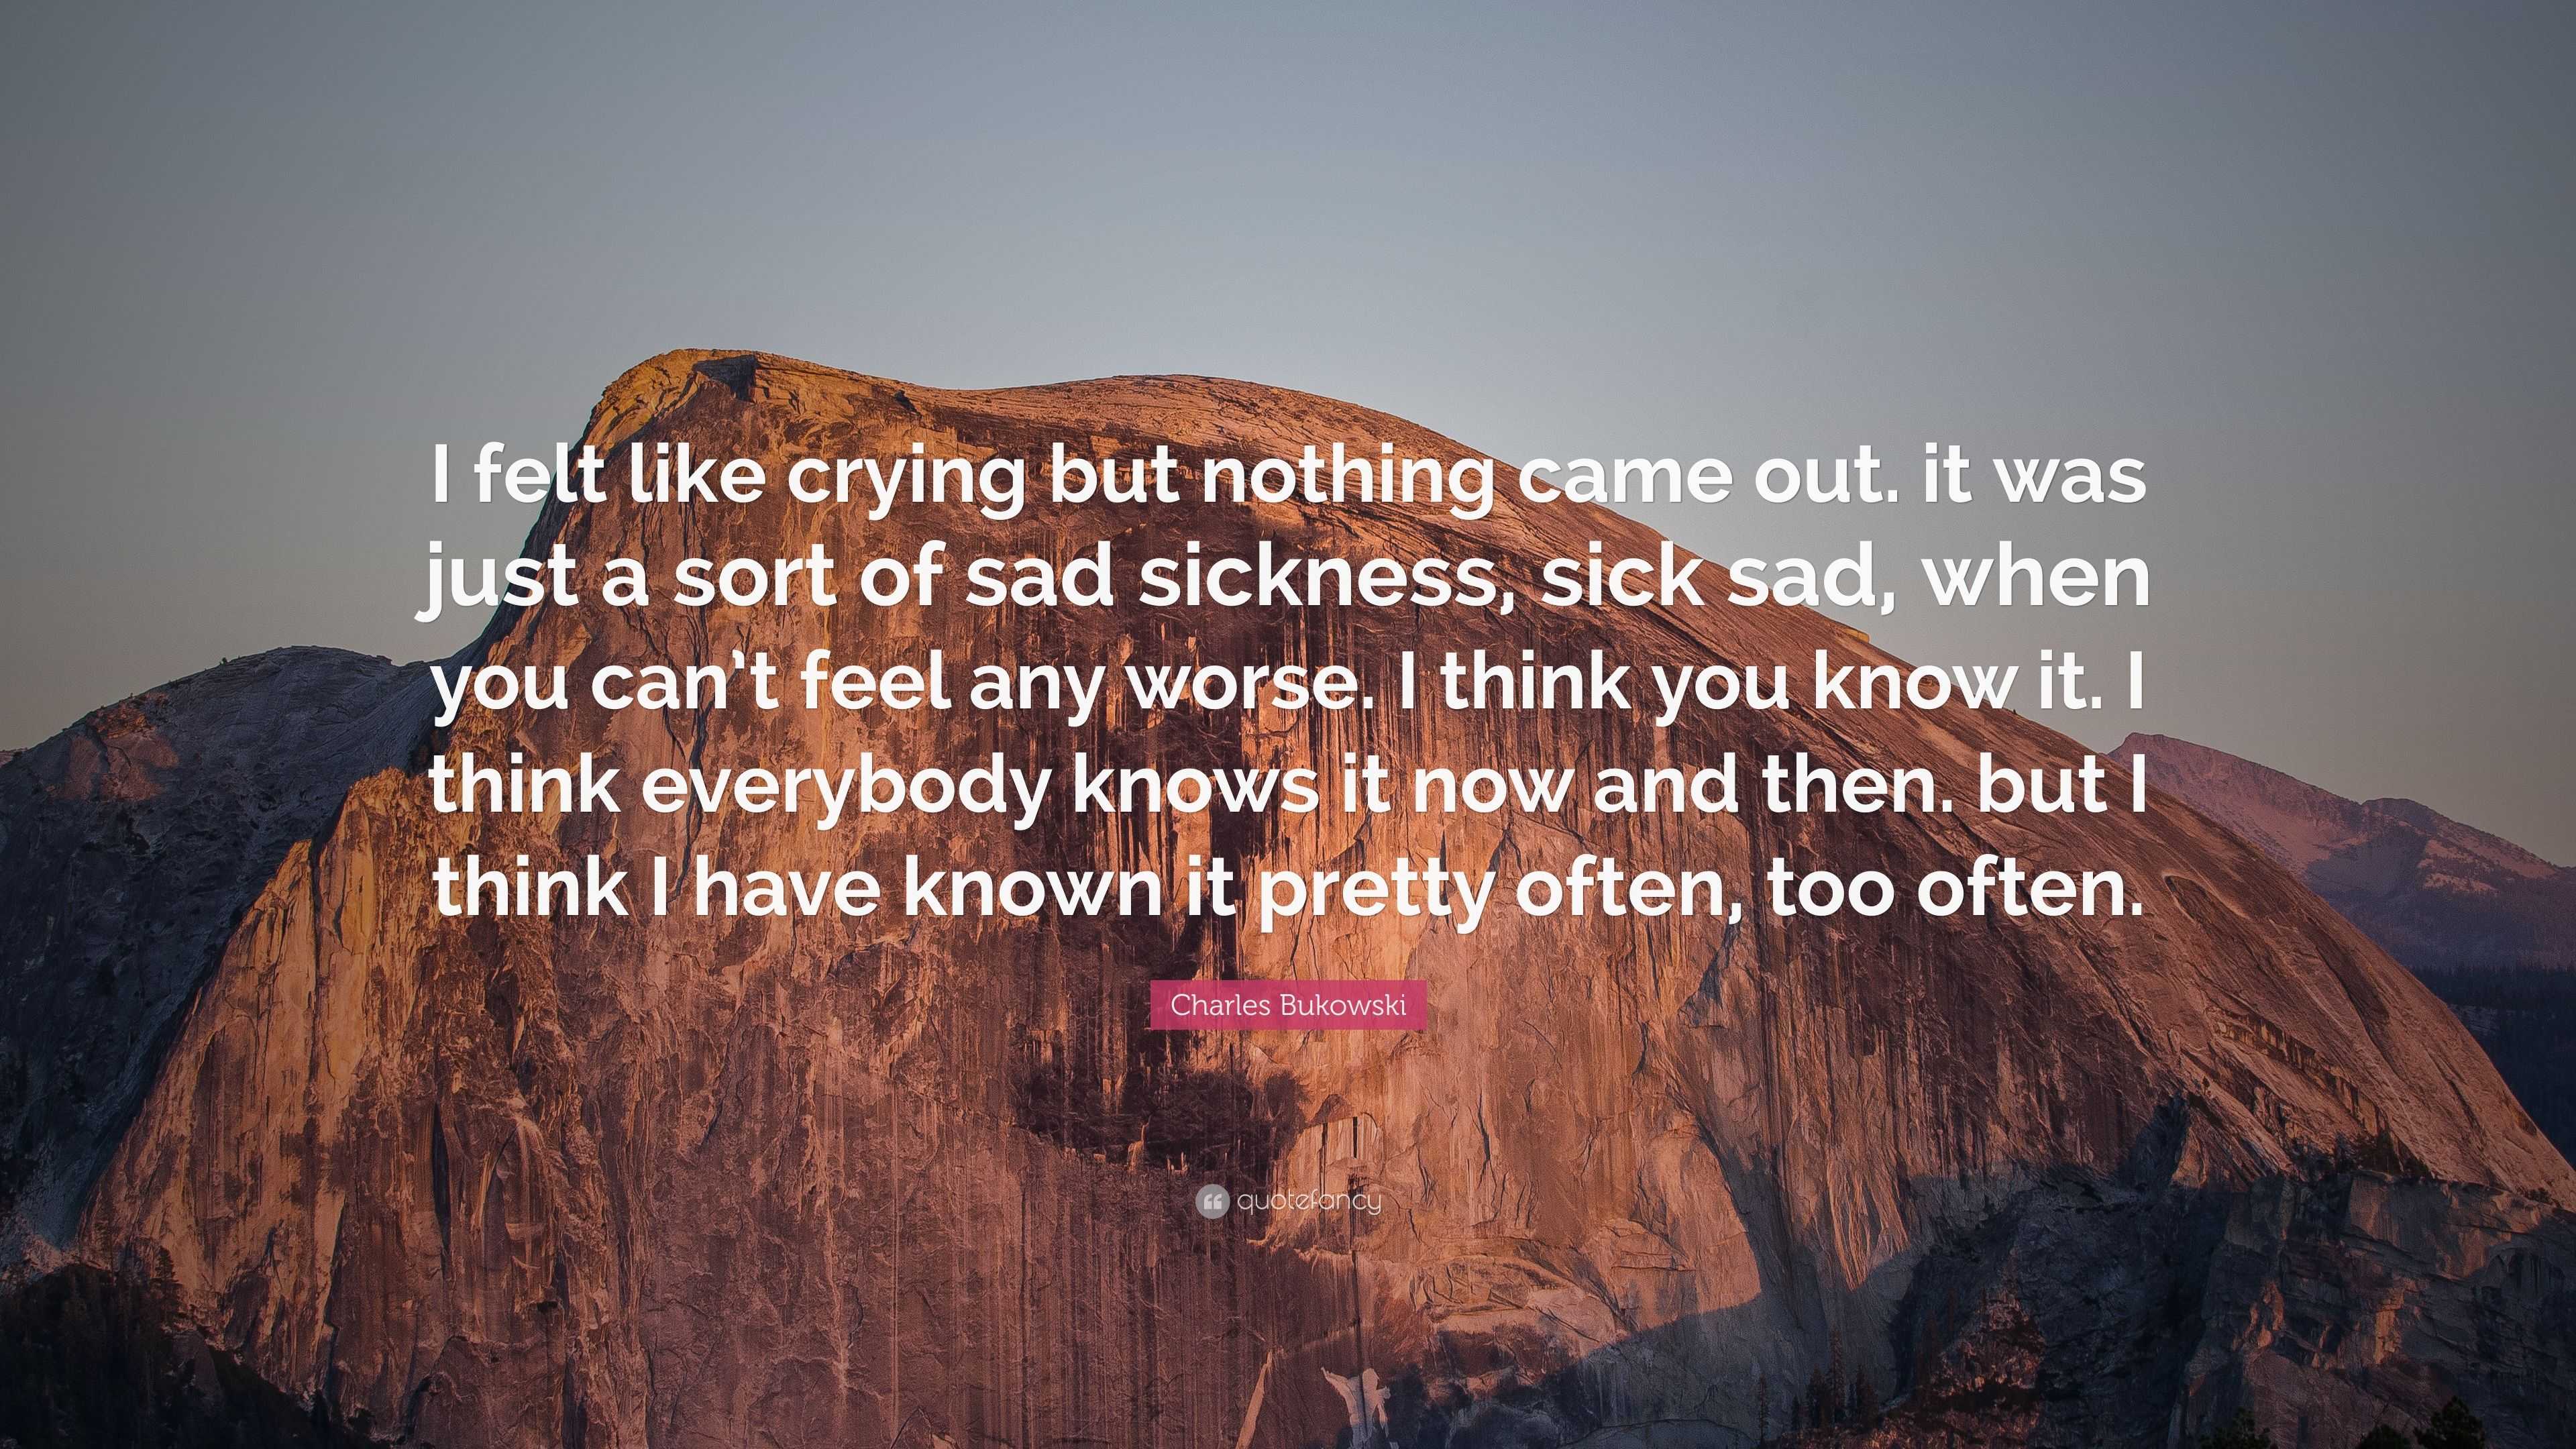 Charles Bukowski Quote: “I felt like crying but nothing came out. it ...